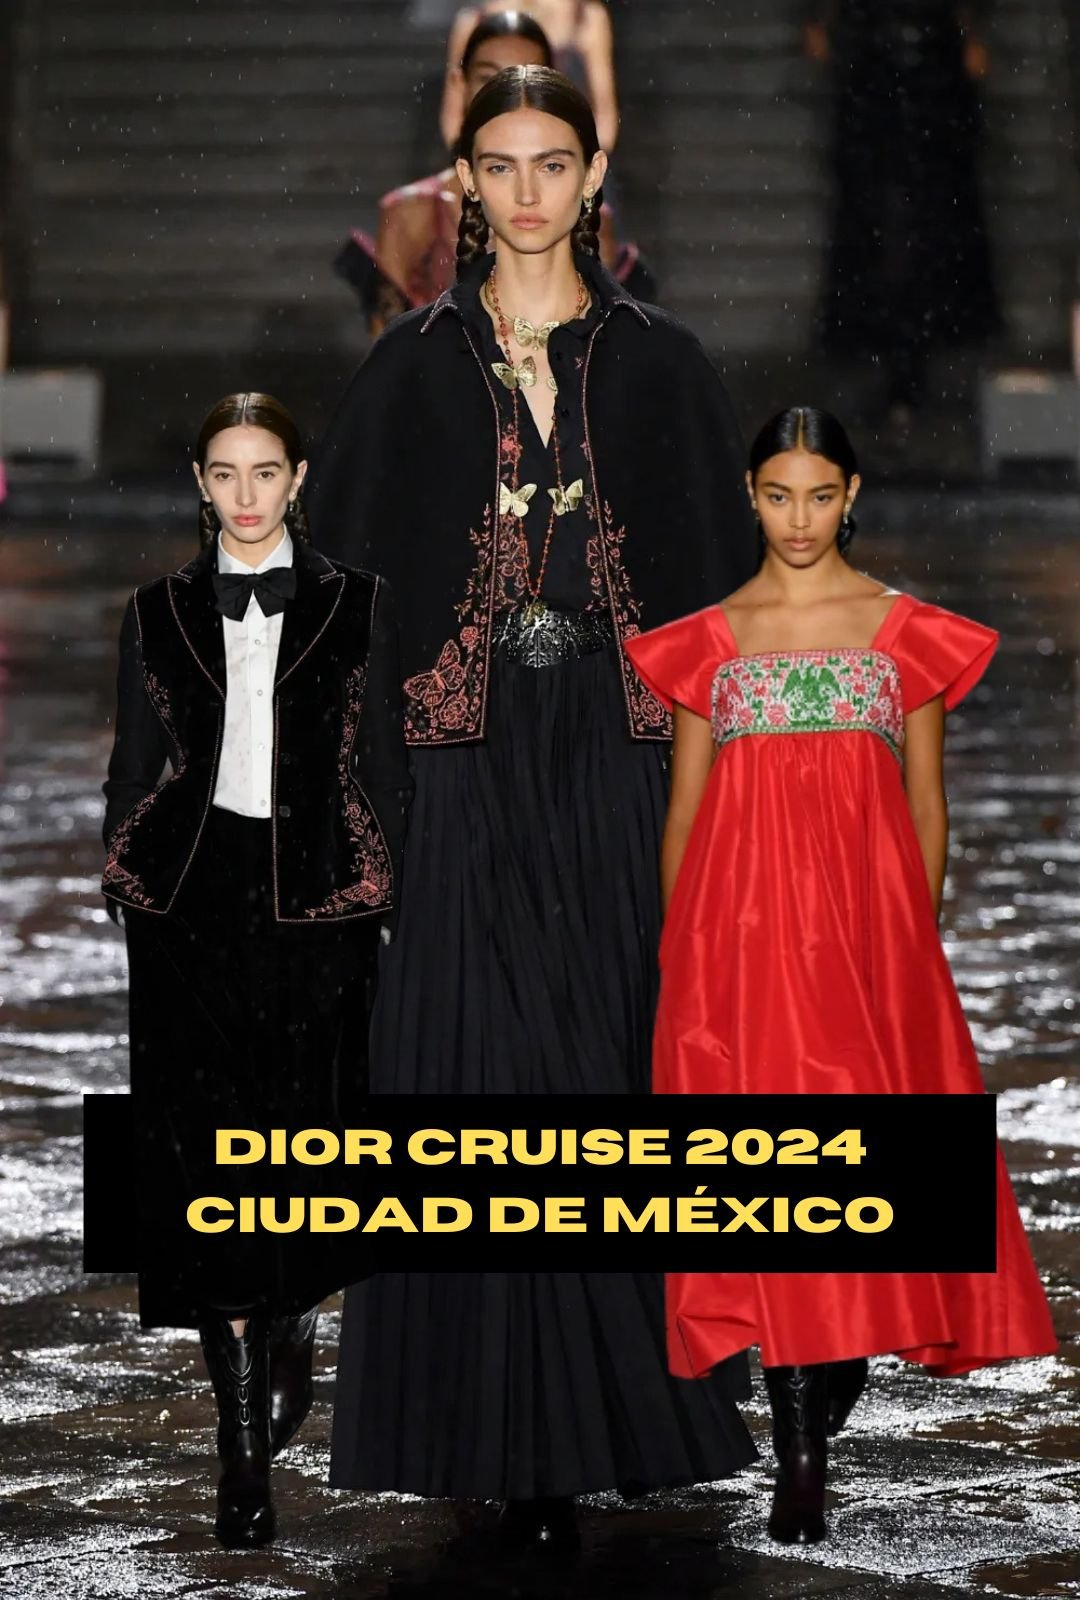 Cruise 2024 Show